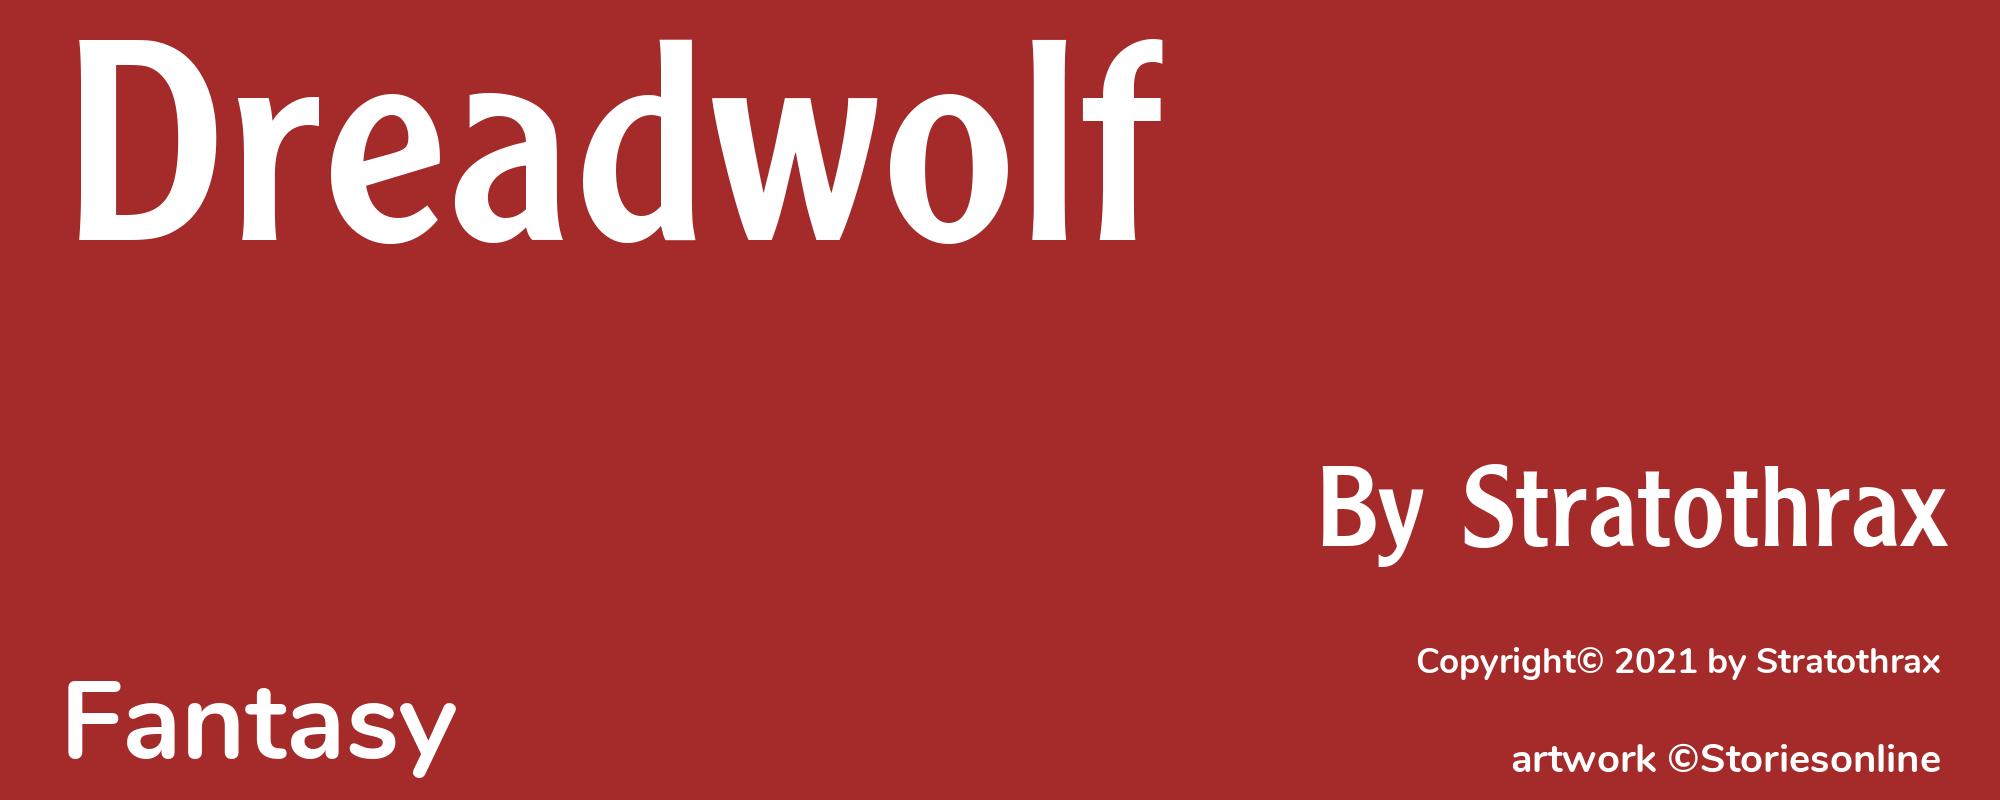 Dreadwolf - Cover